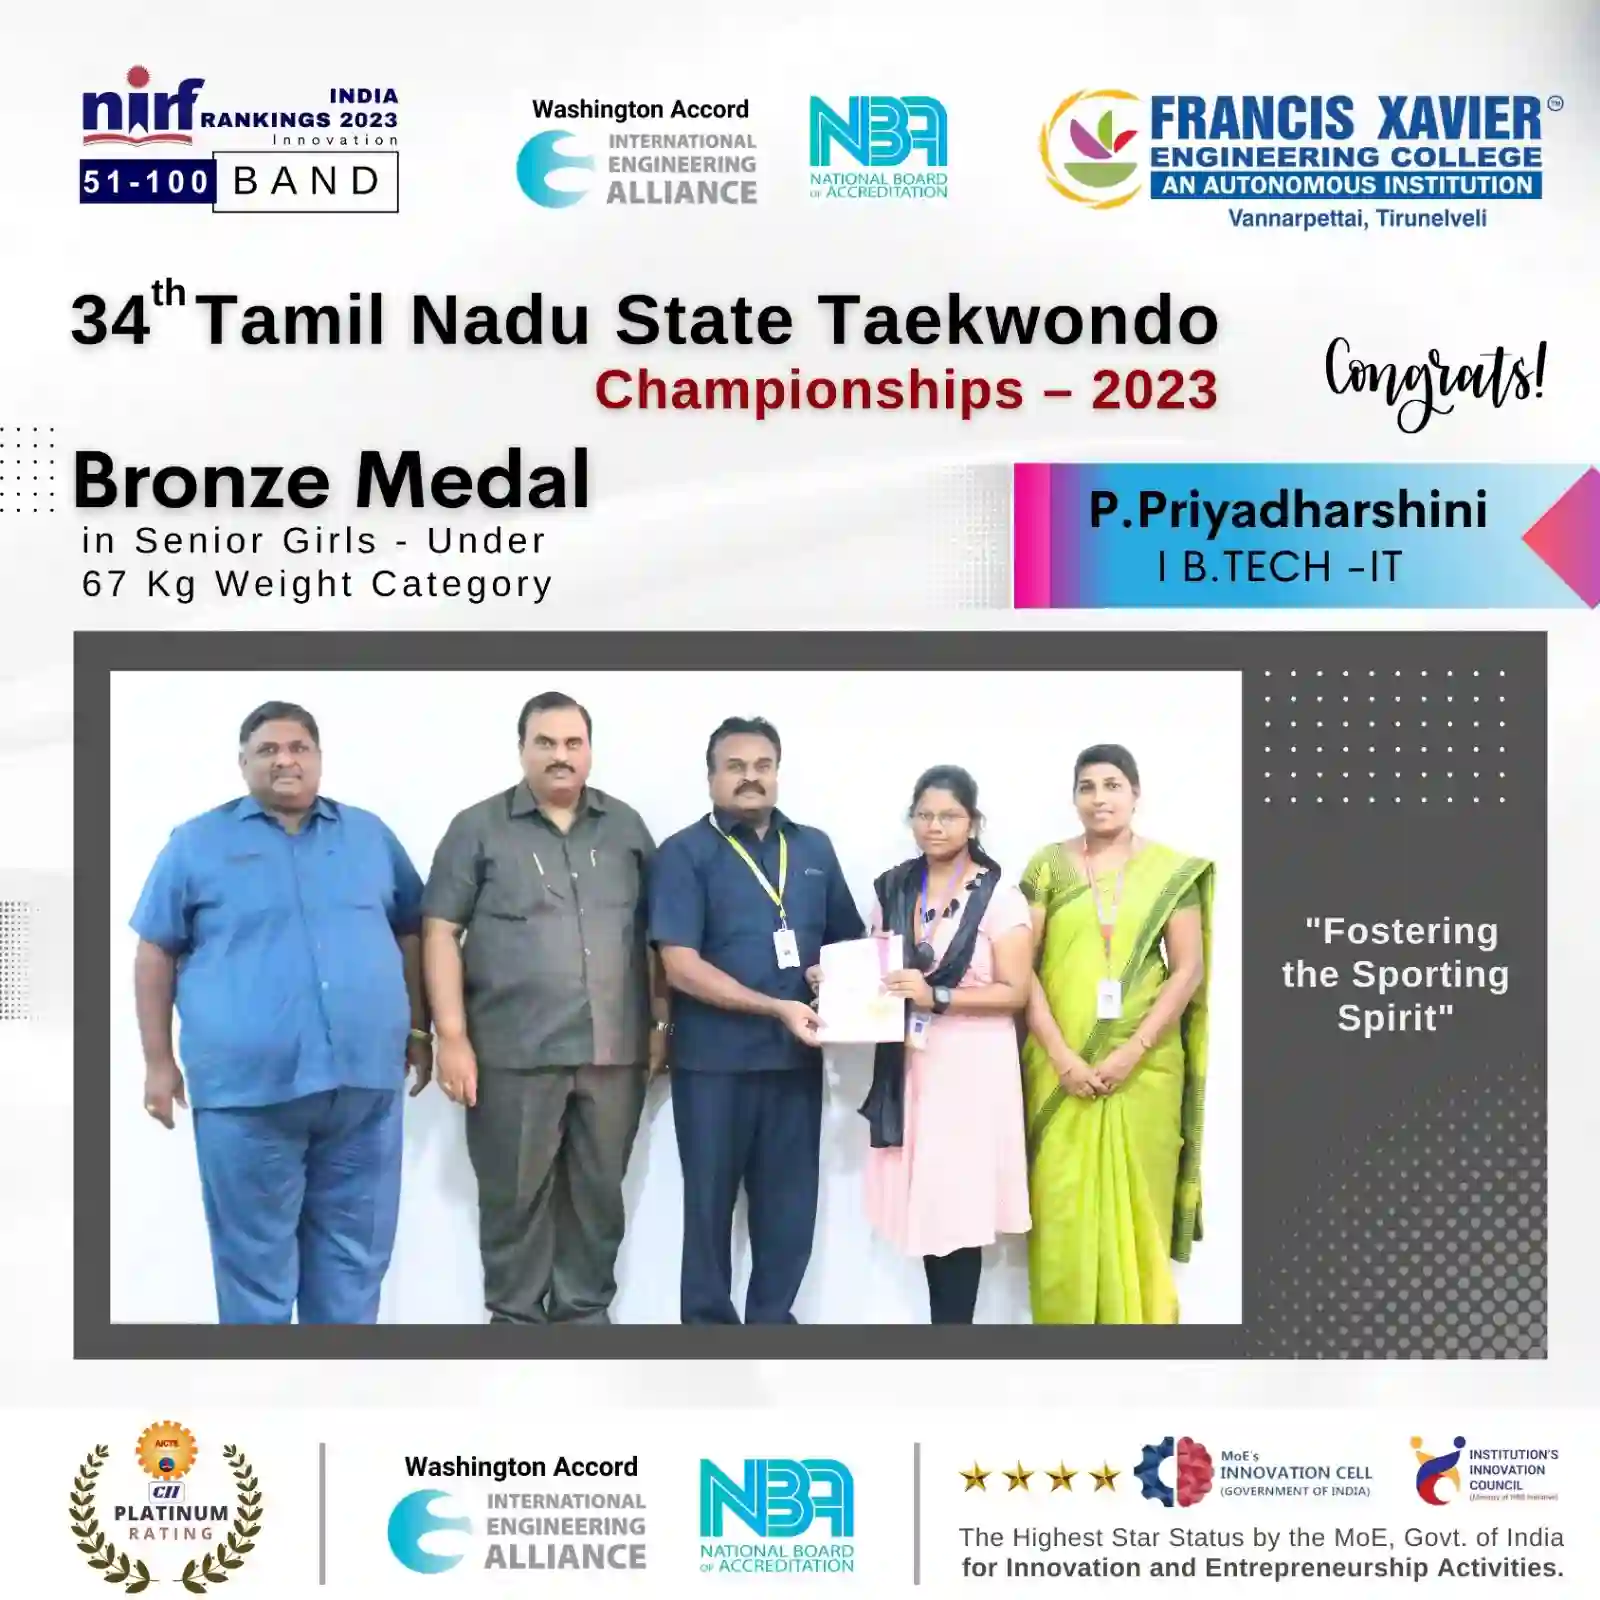 34th Tamil Nadu Taekwondo Championships - 2023